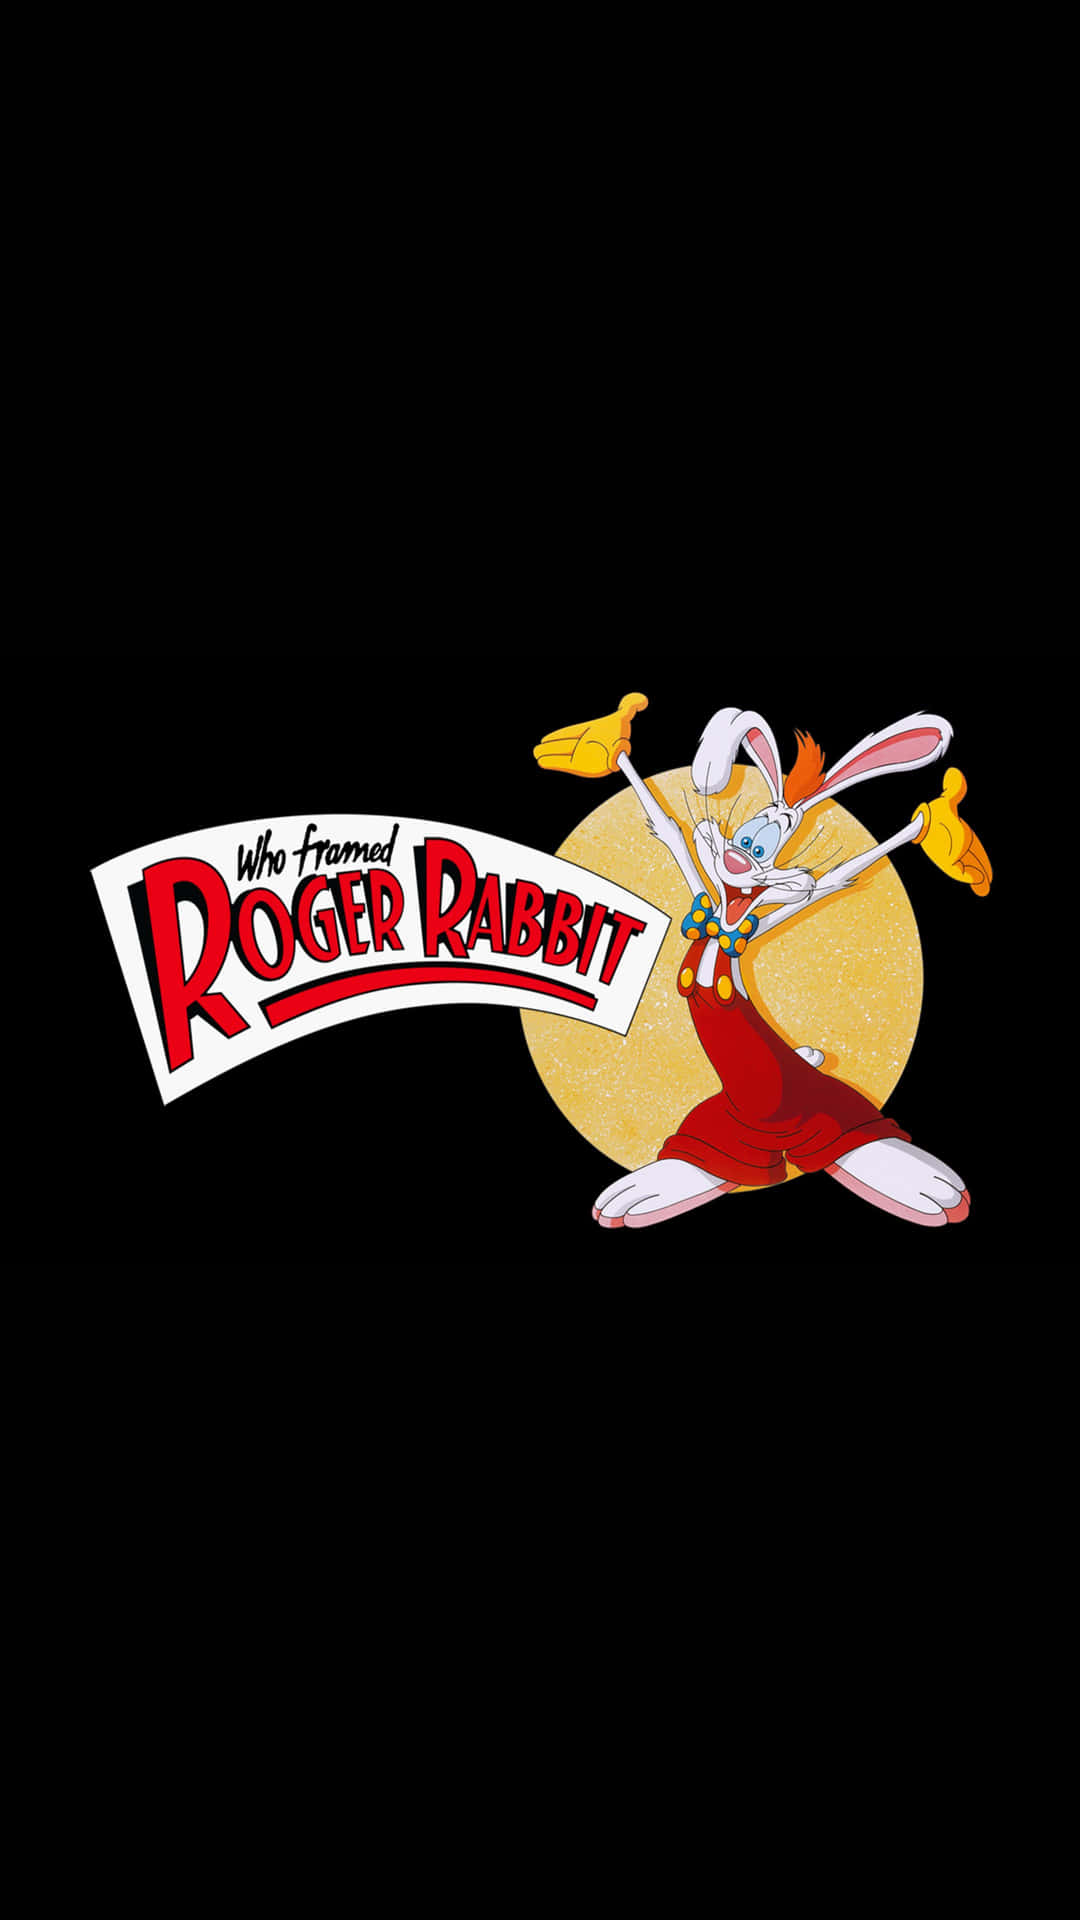 Roger Rabbit Movie Logo Graphic